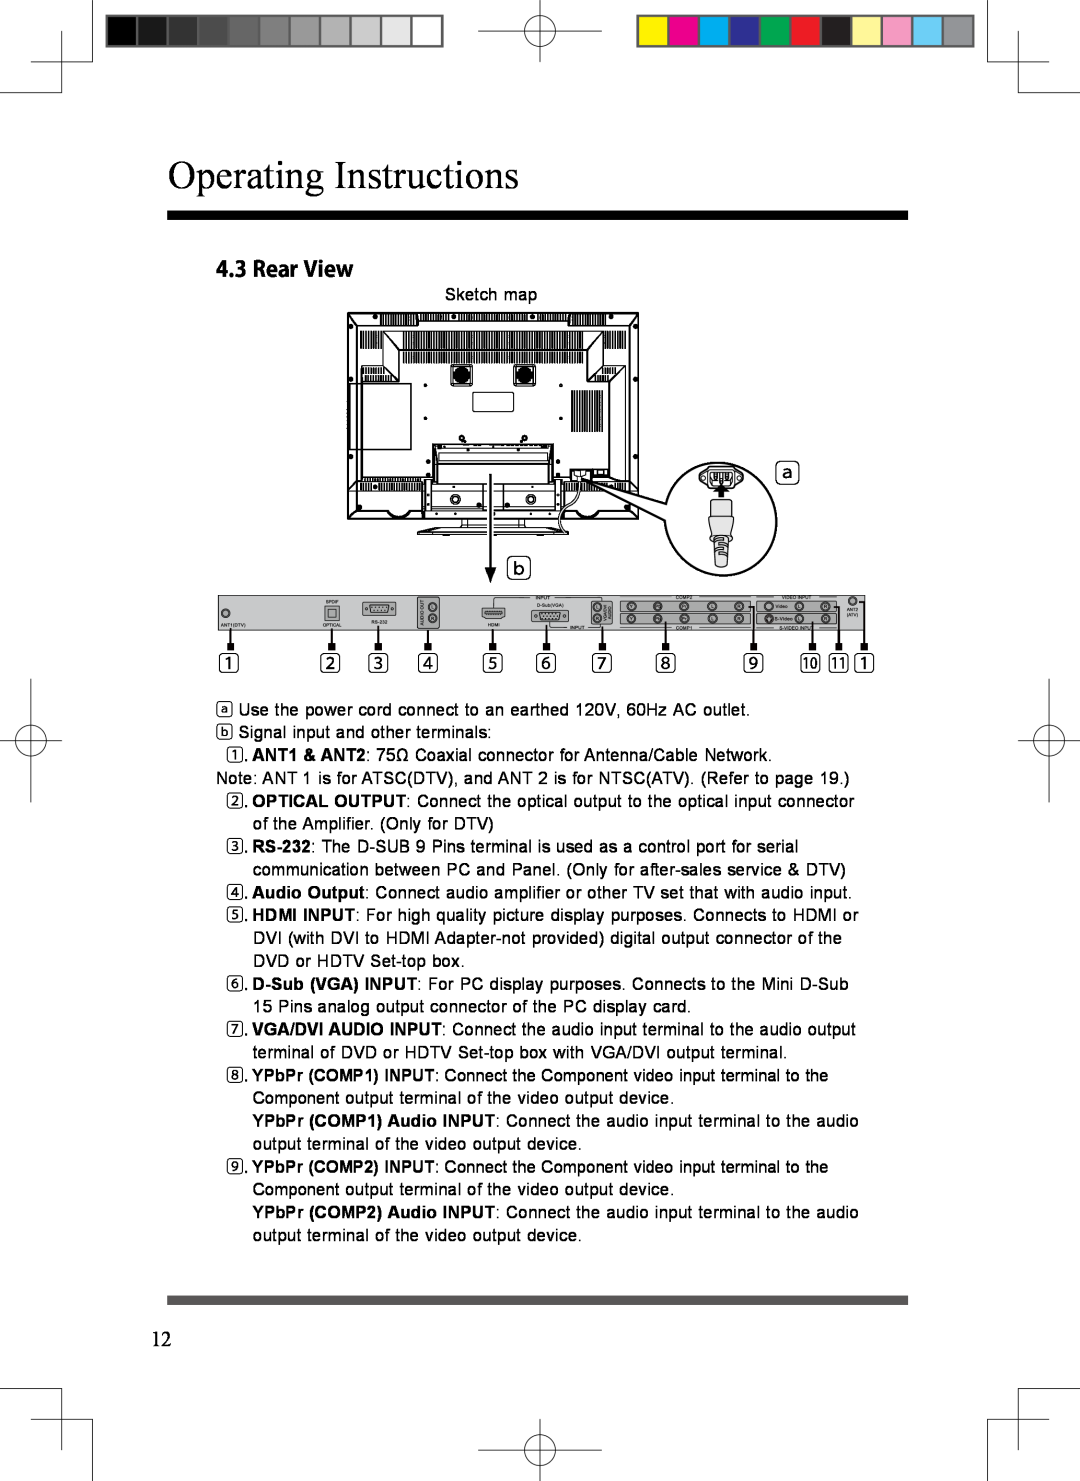 Scott LCT37SHA manual Rear View, 2 3 4 5 6 7, 9  , Operating Instructions 